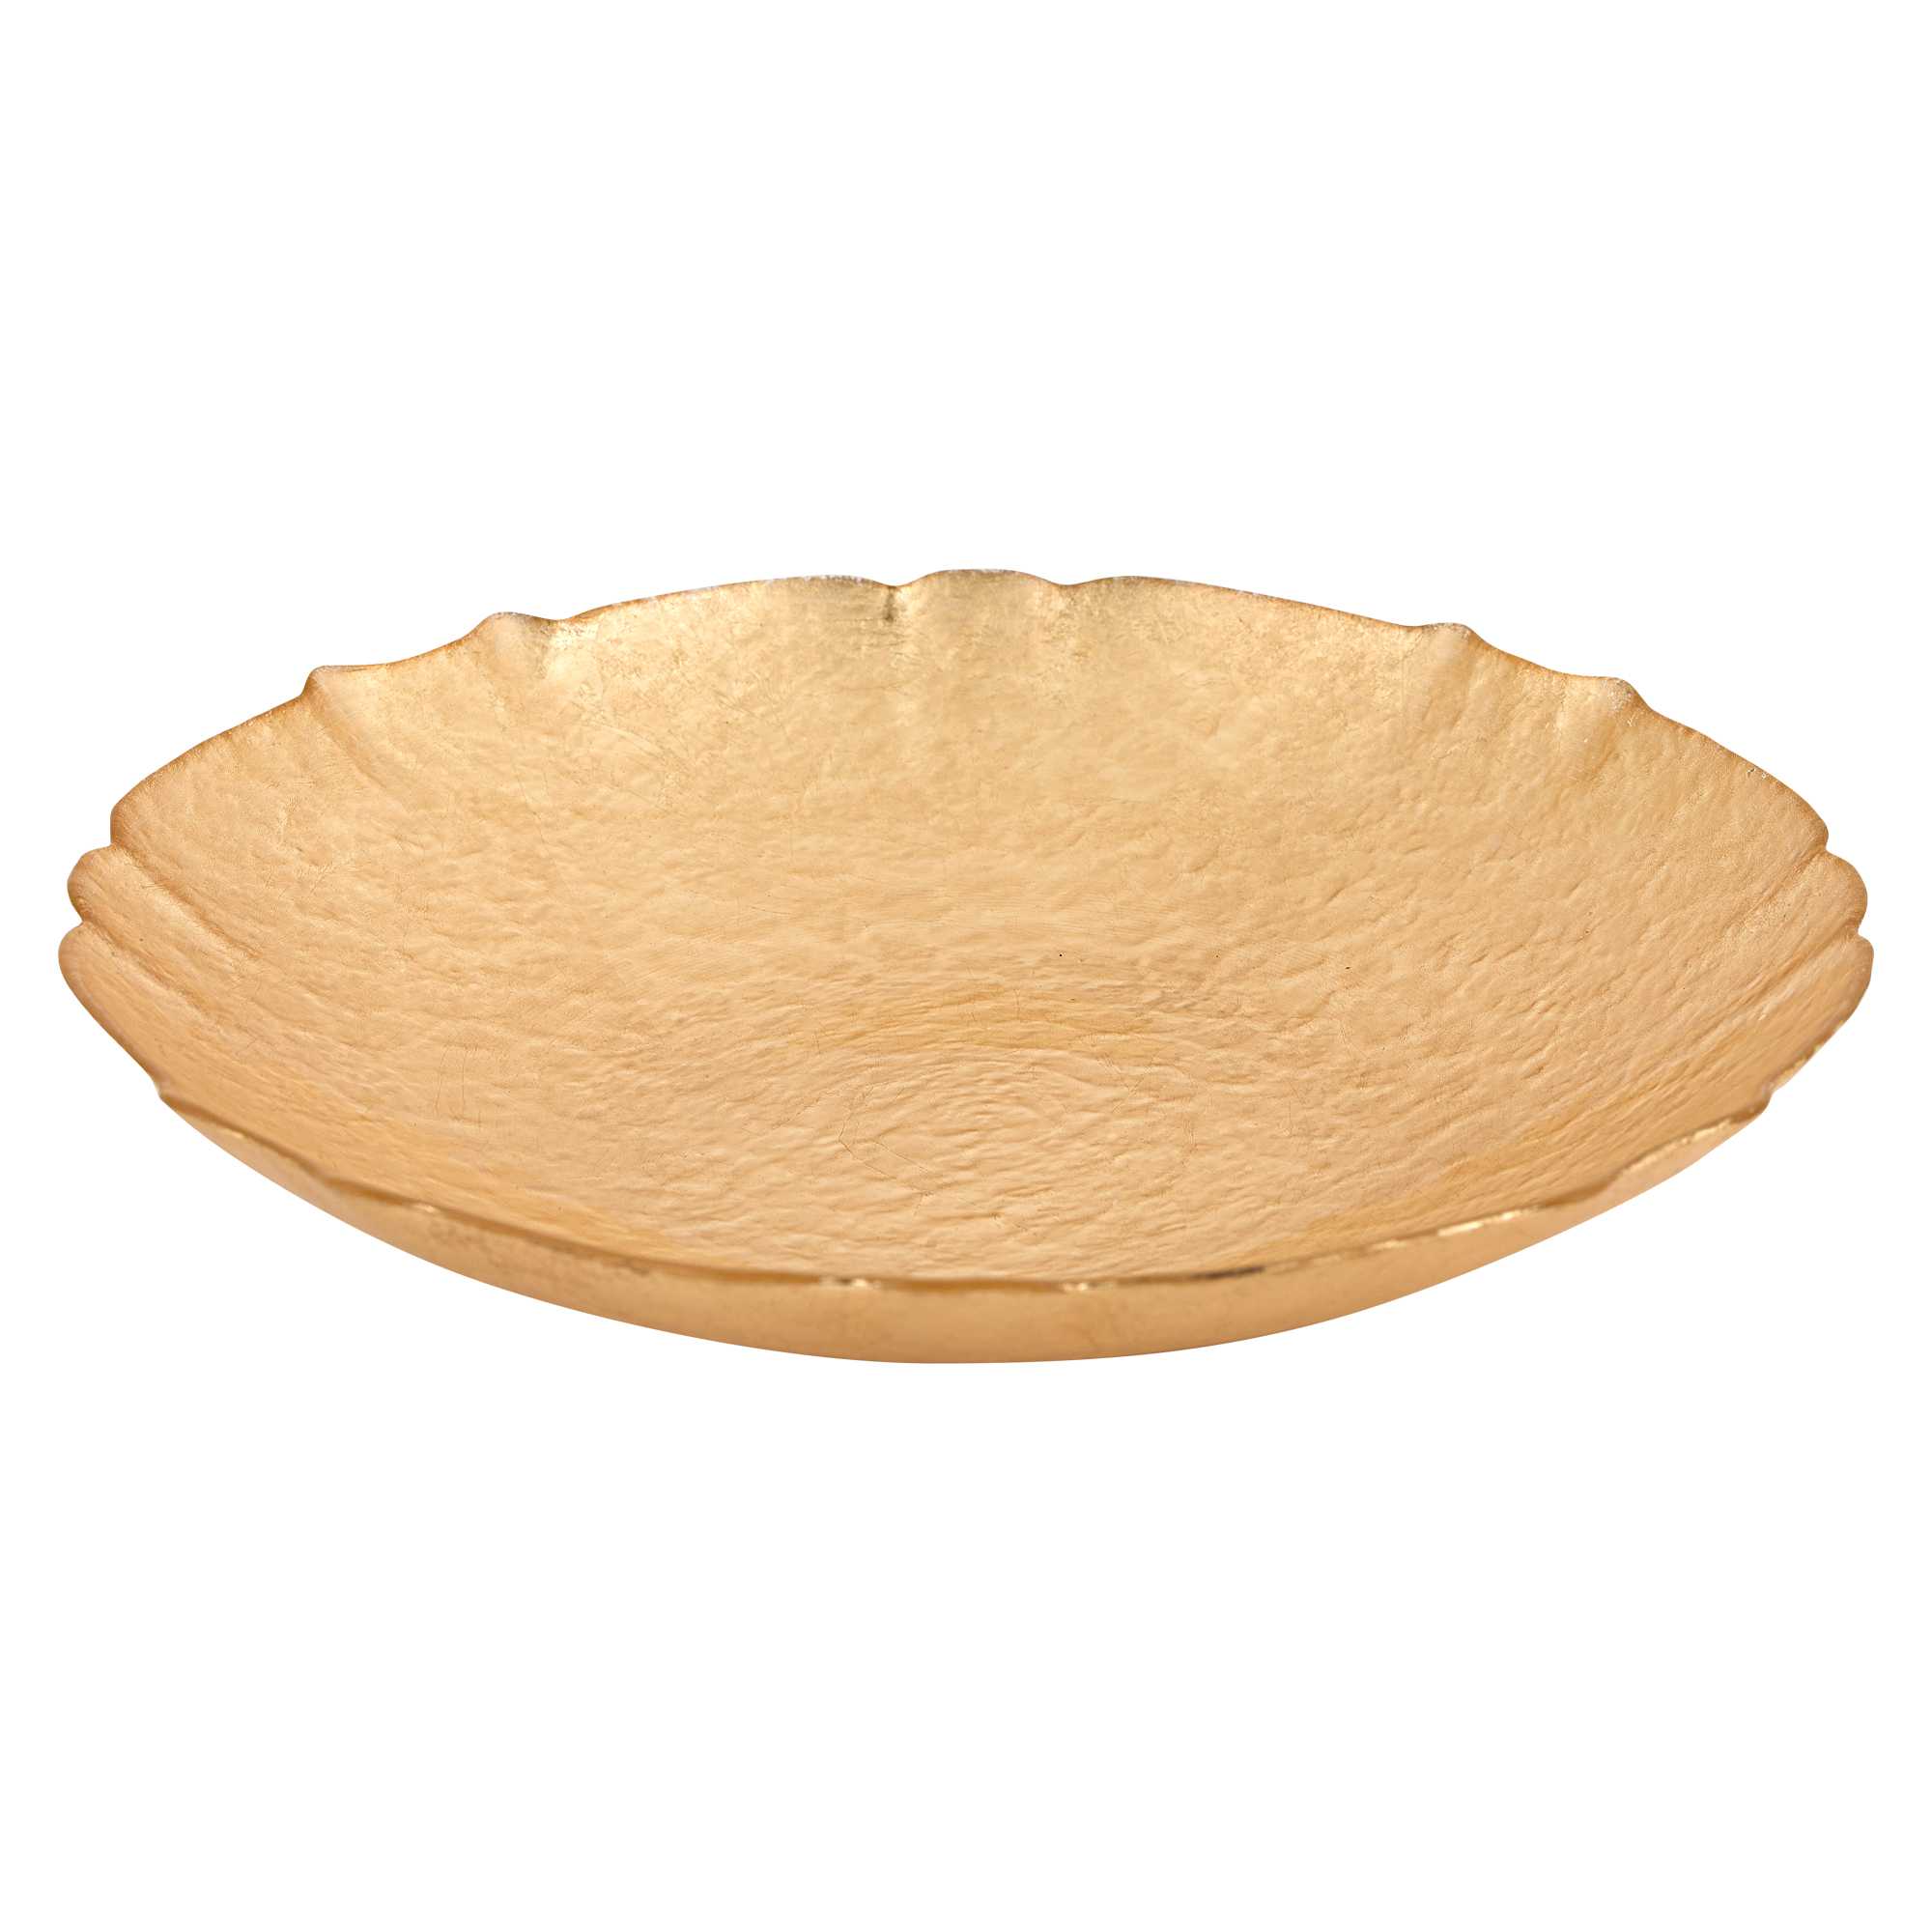 12" Glass Authentic Gold Leaf Centerpiece Bowl